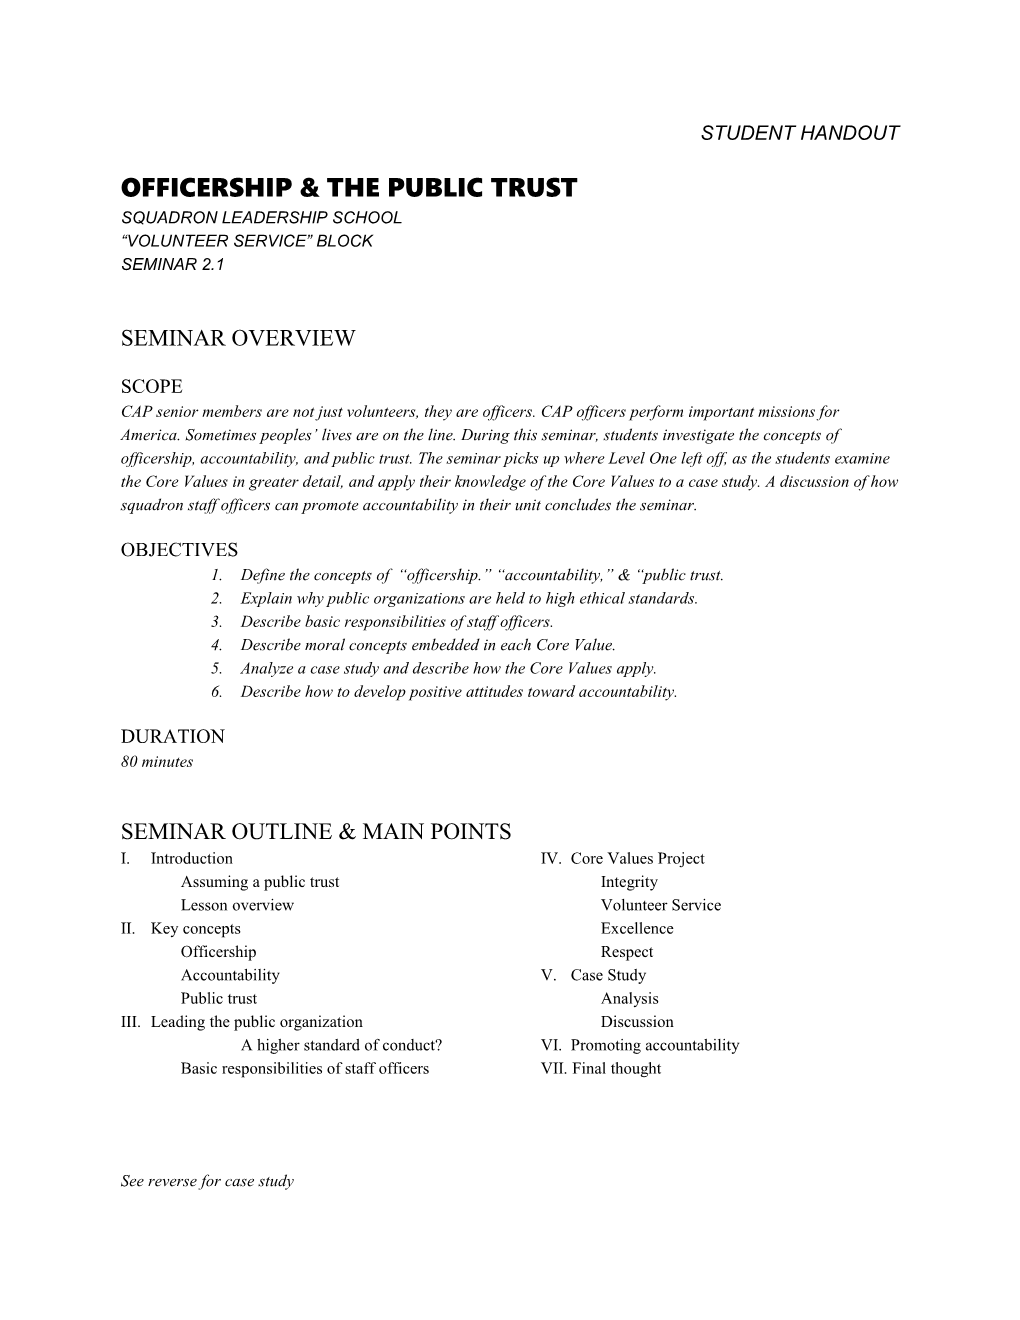 Officership & the Public Trust